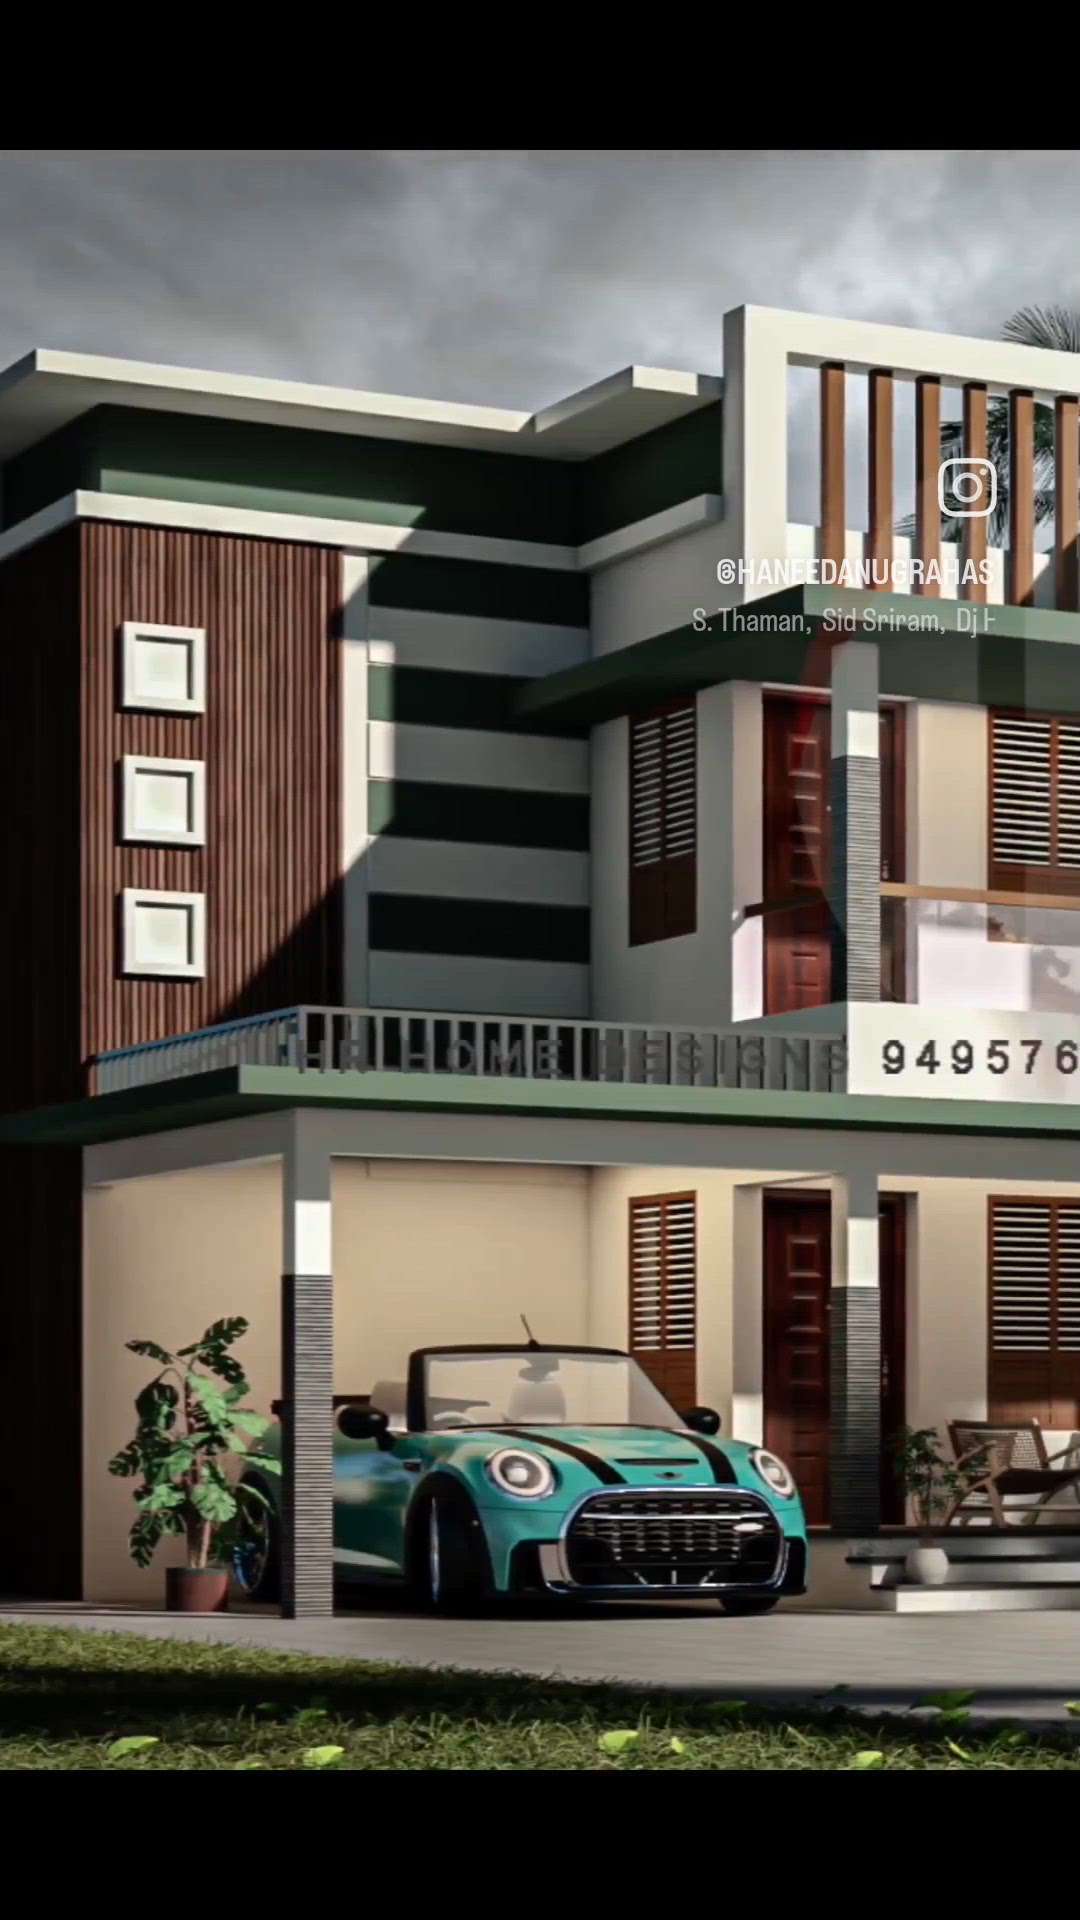 kerala home design plan
#KeralaStyleHouse #moderndesign #ContemporaryHouse #HouseDesigns #SmallHouse #keralaplanners #Malappuram #Kozhikode #Kottayam #ElevationHome #3design